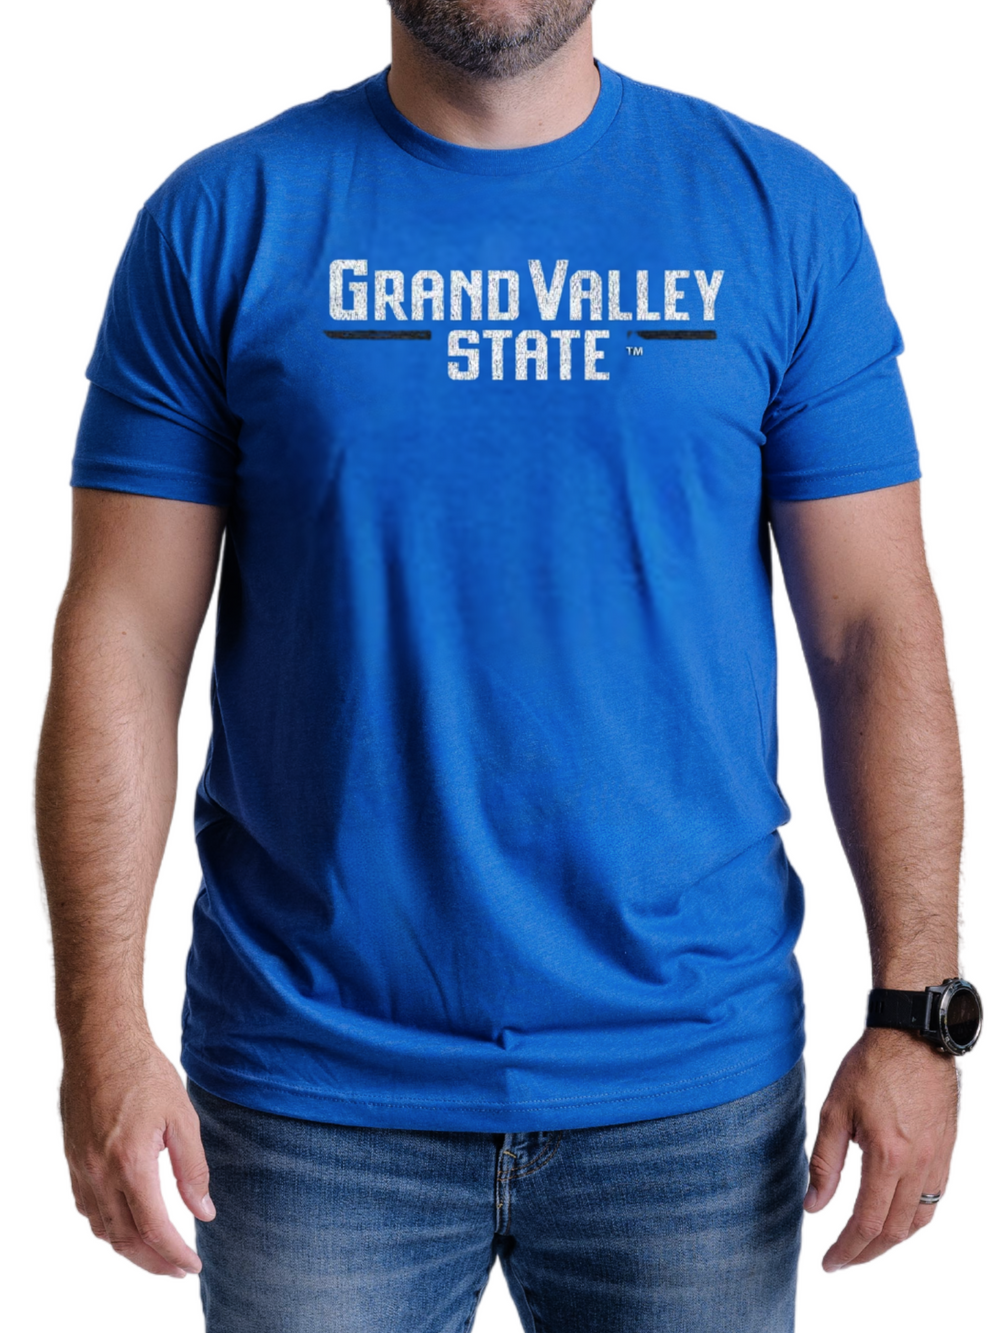 Grand Valley State University Shirt GVSU Lakers Premium Blue T-Shirt on male model